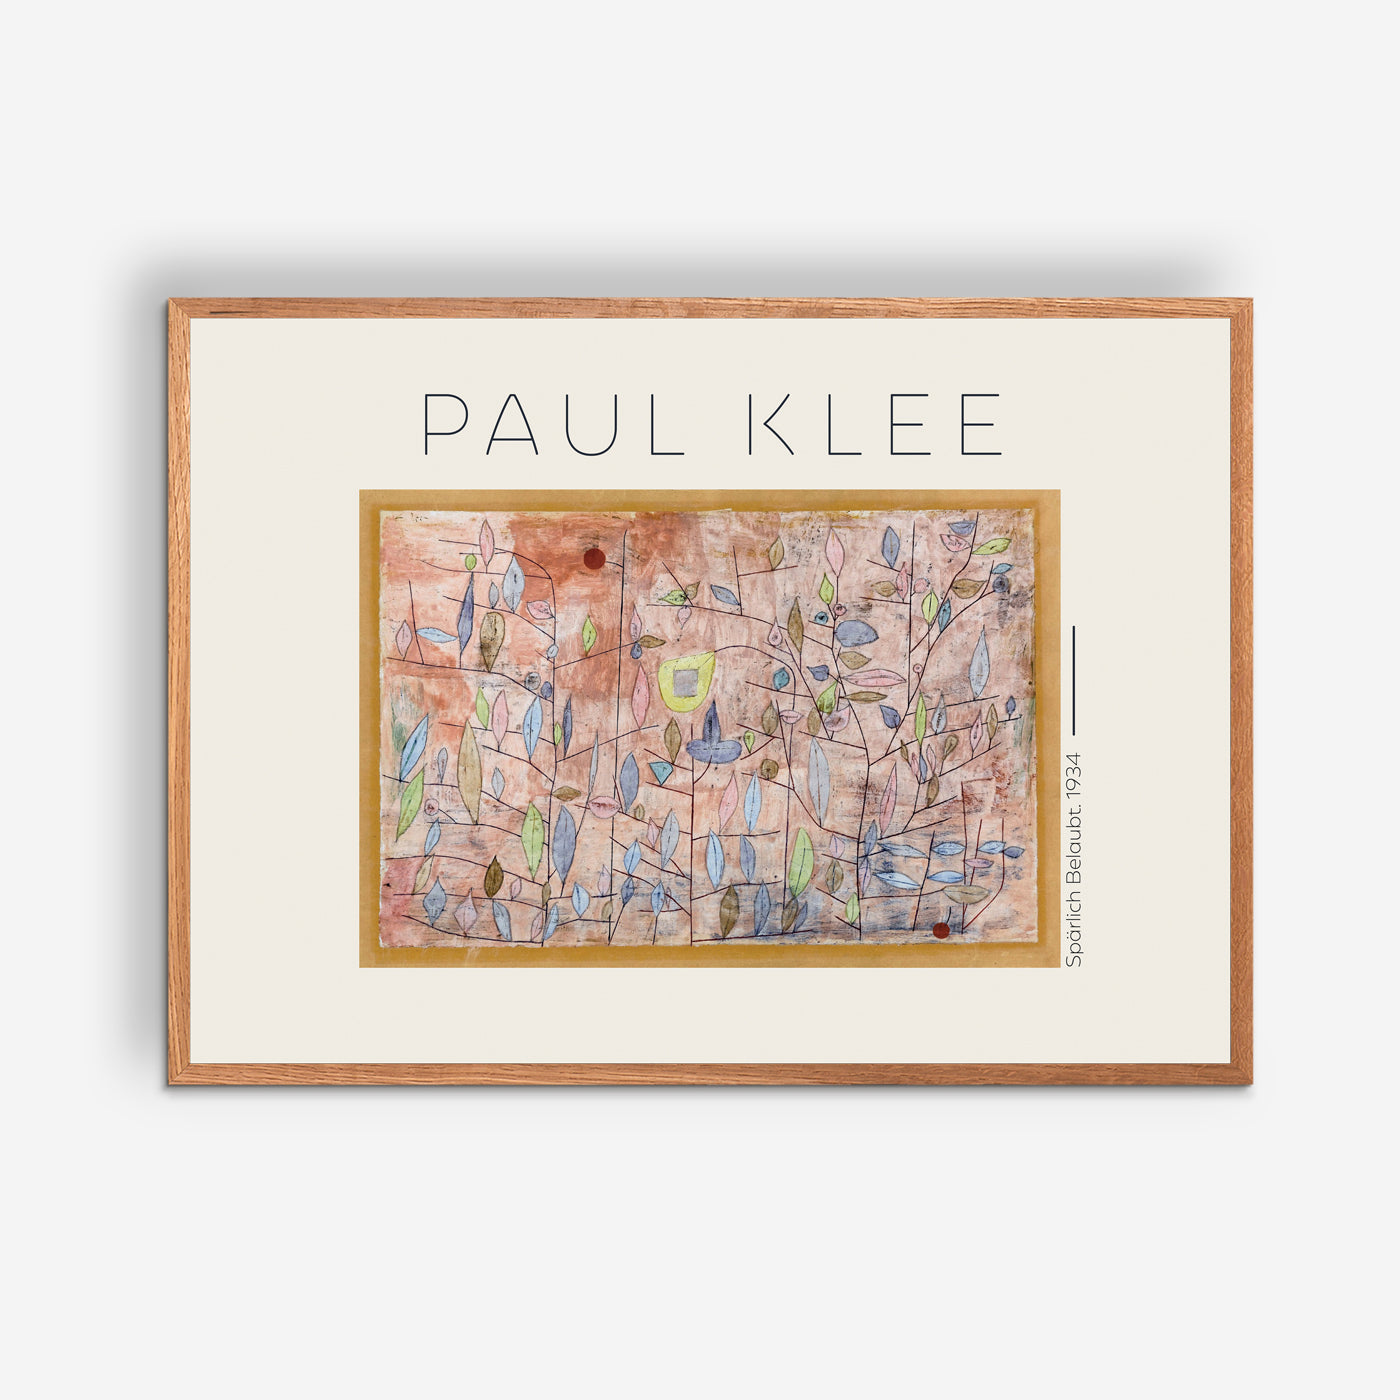 Spärlich Belaubt 1934 - Paul Klee